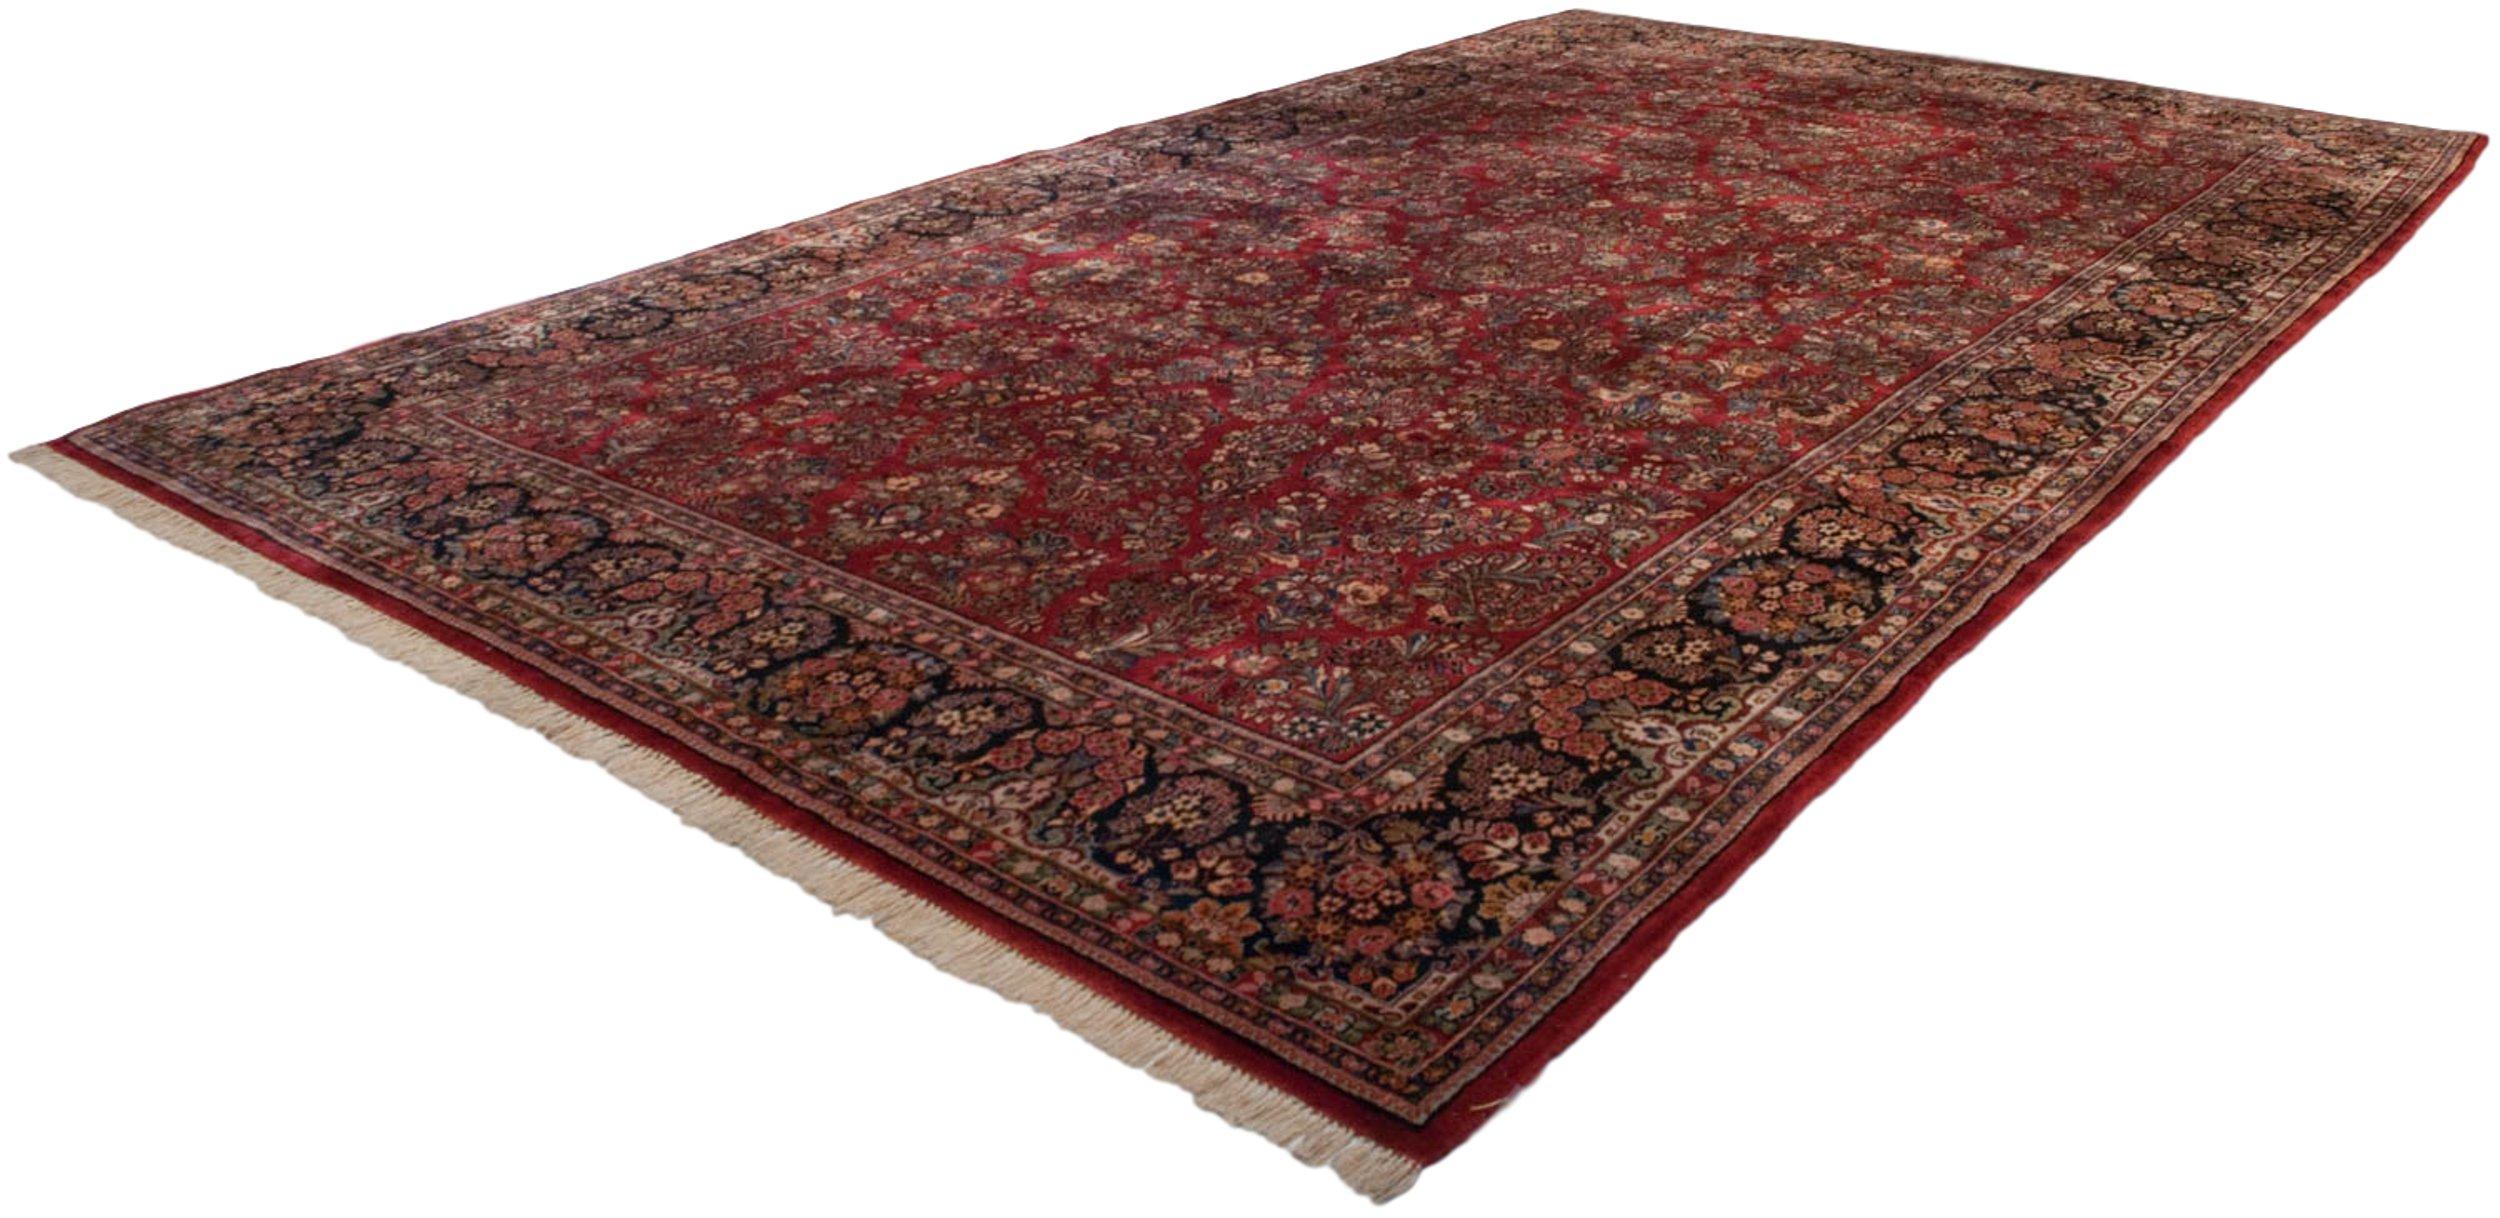 Vintage American Sarouk Carpet For Sale 7